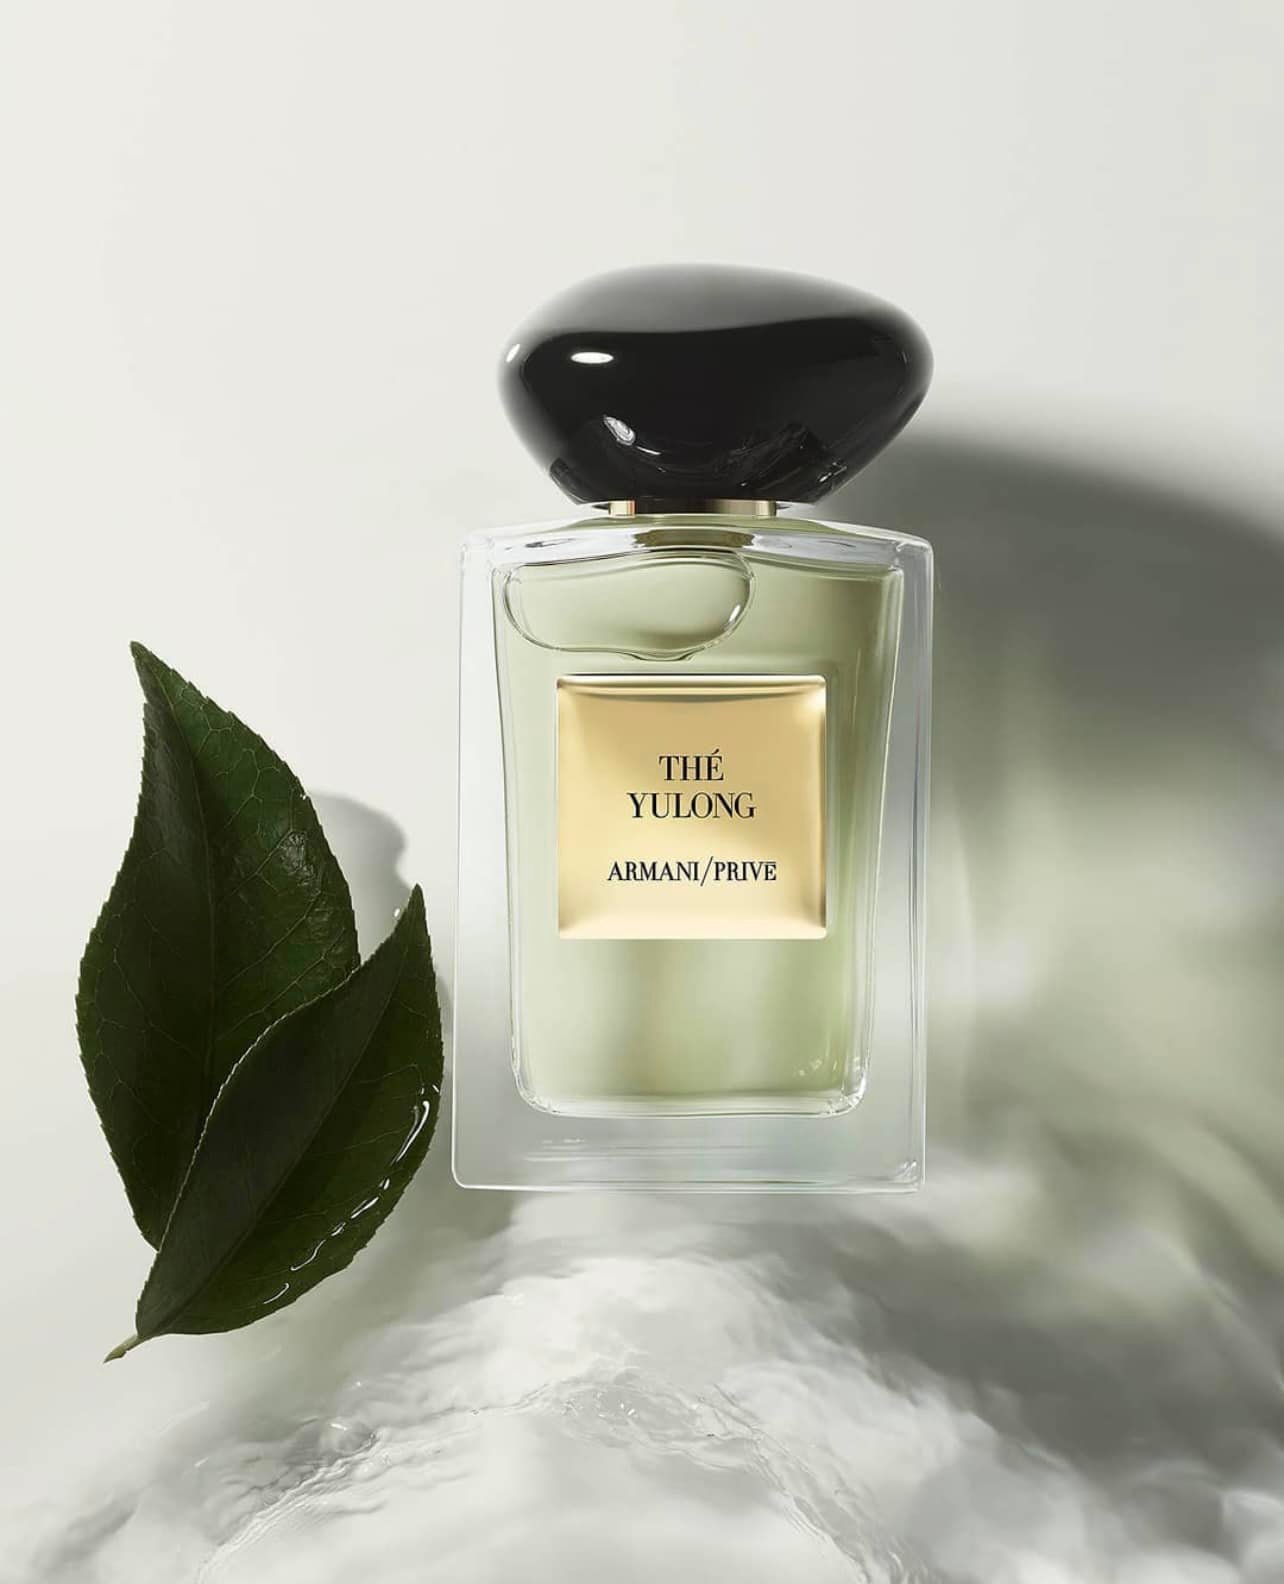 Chiết 10ml] Armani Prive Thé Yulong Eau de Parfum